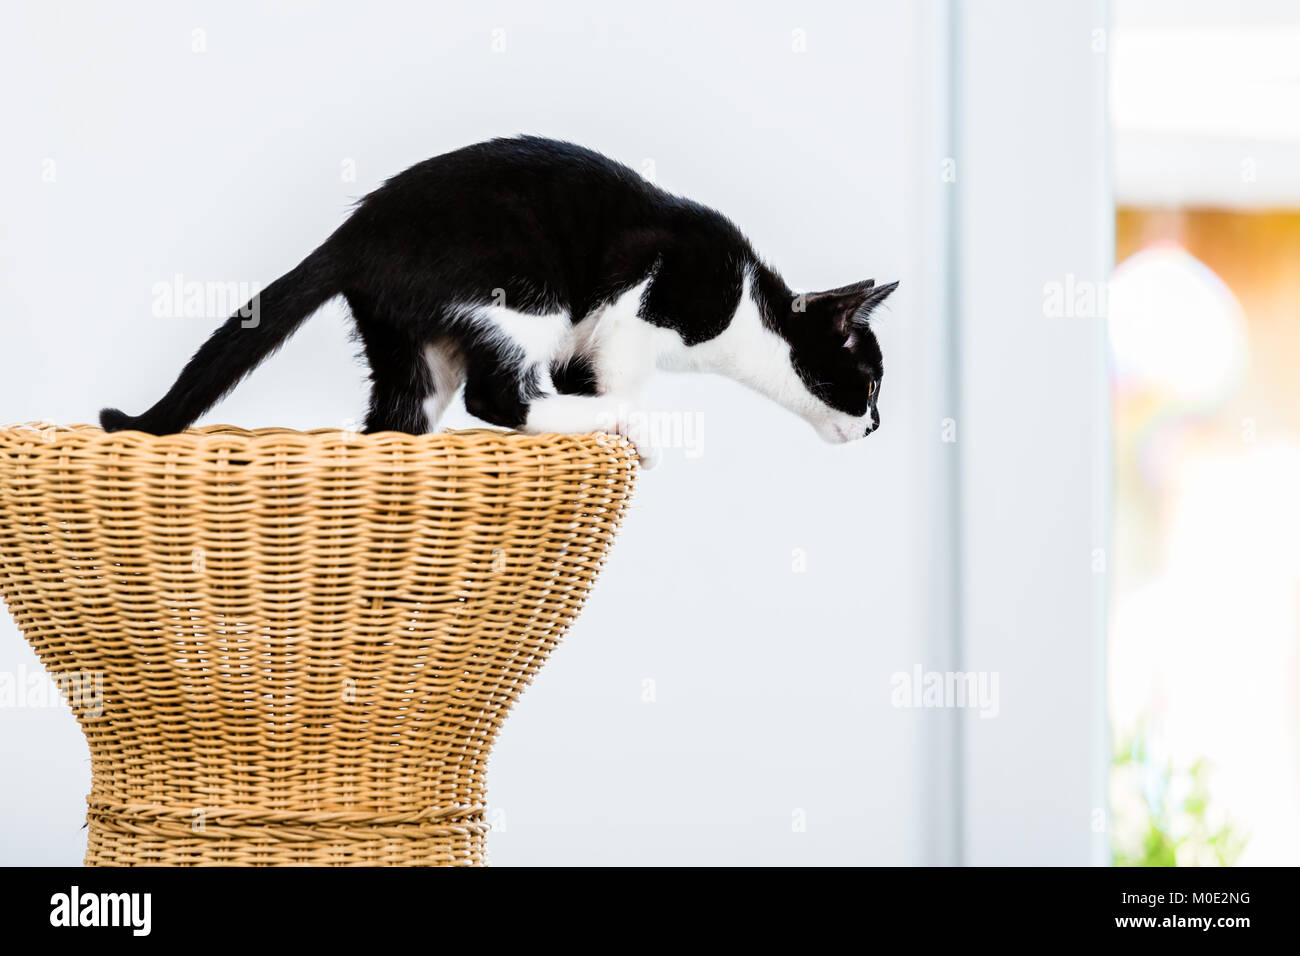 Katze aus Rattan Stuhl zu springen Stockfoto